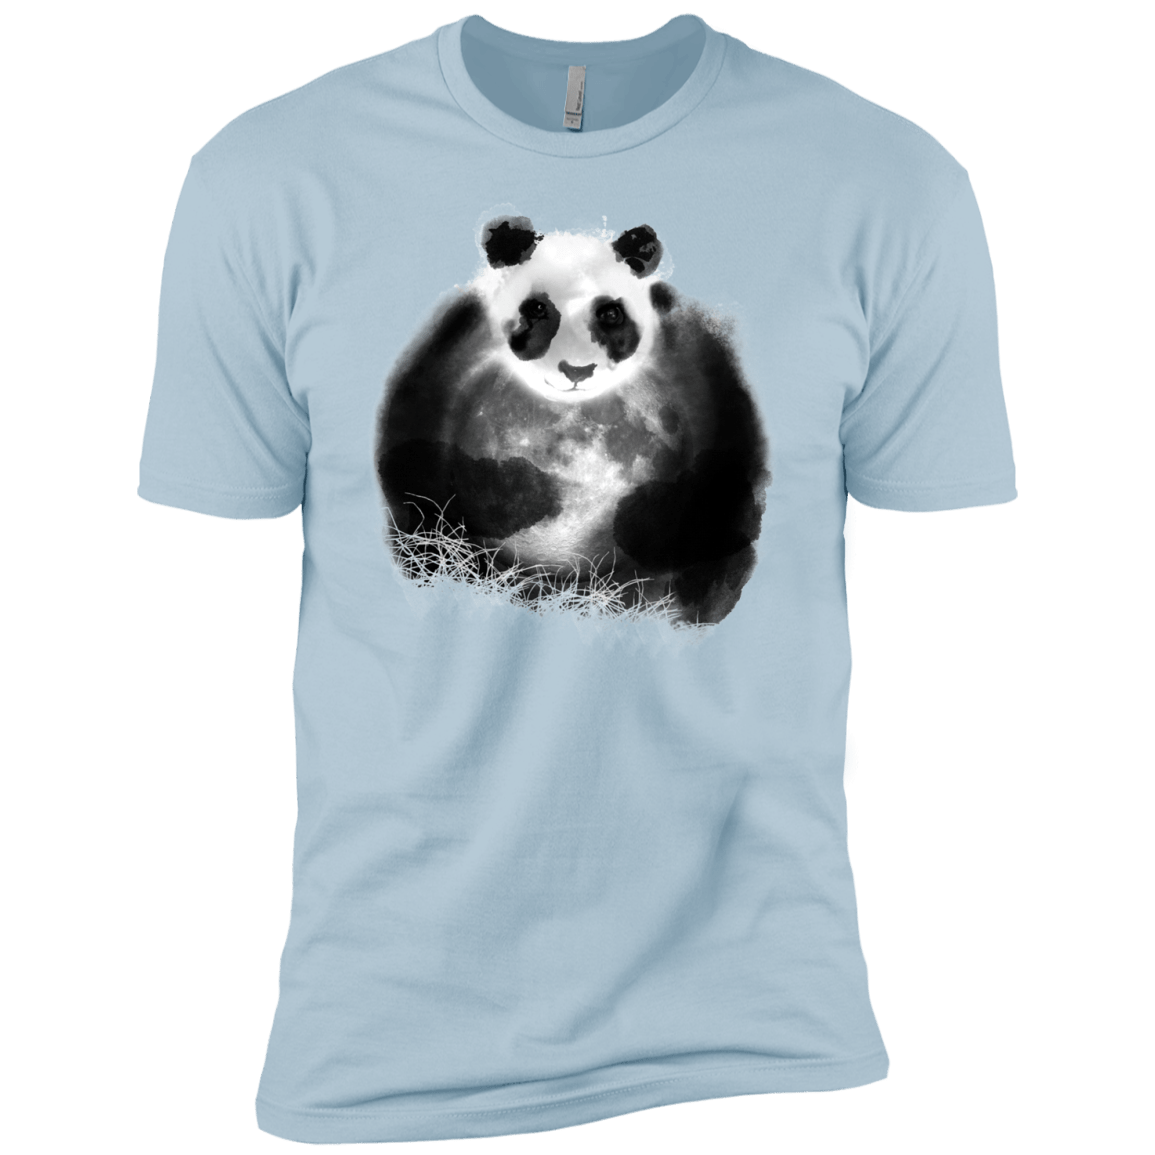 Moon Catcher Boys Premium T-Shirt